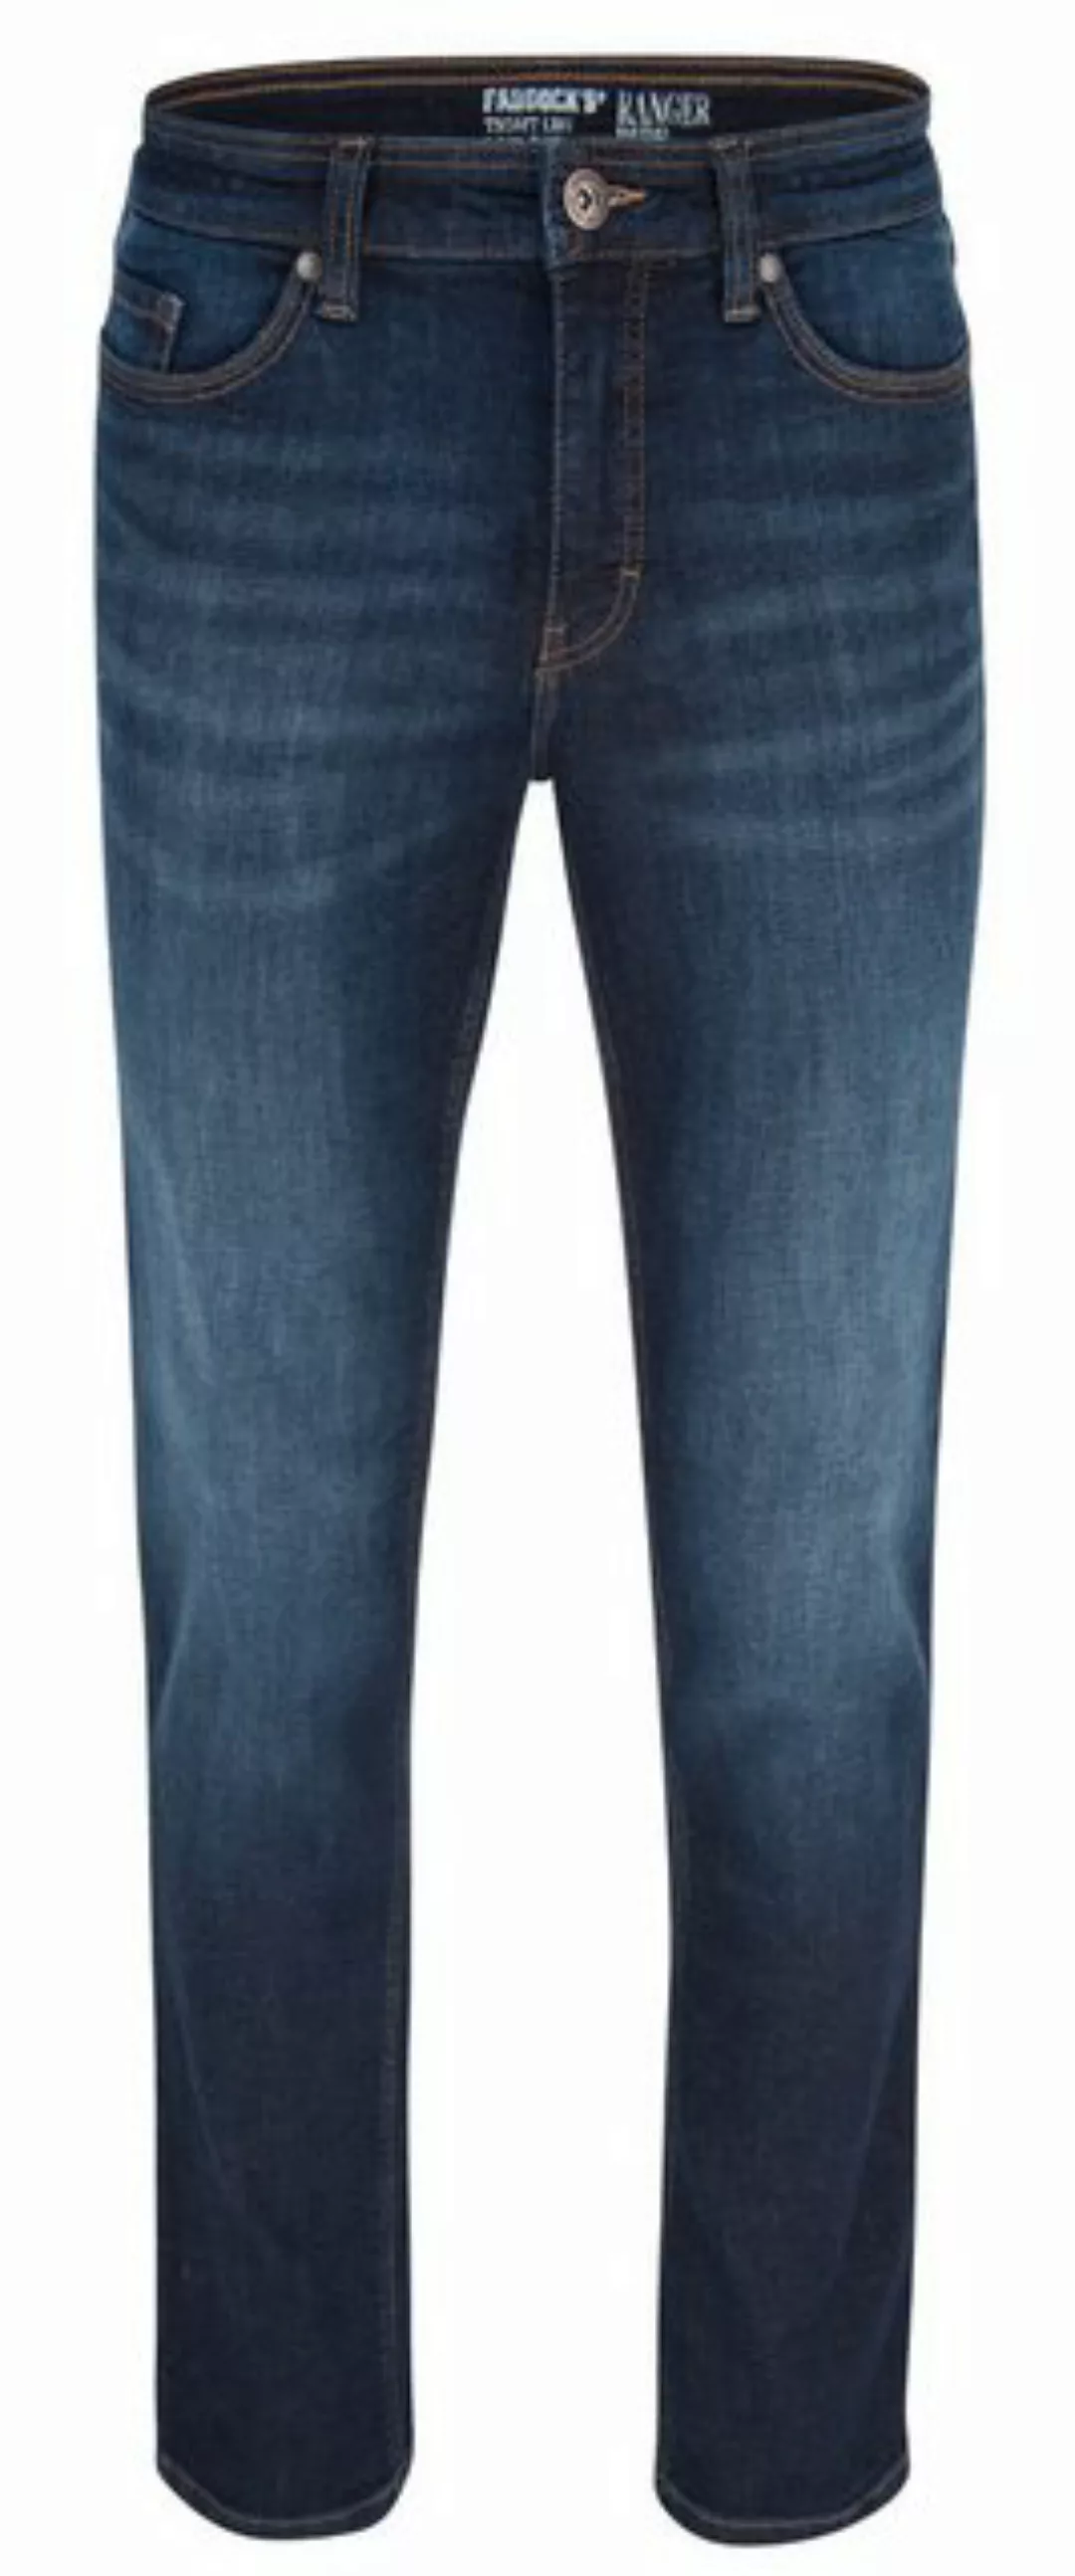 Paddock's 5-Pocket-Jeans PADDOCKS RANGER PIPE dark blue 80120 4981.5462 günstig online kaufen